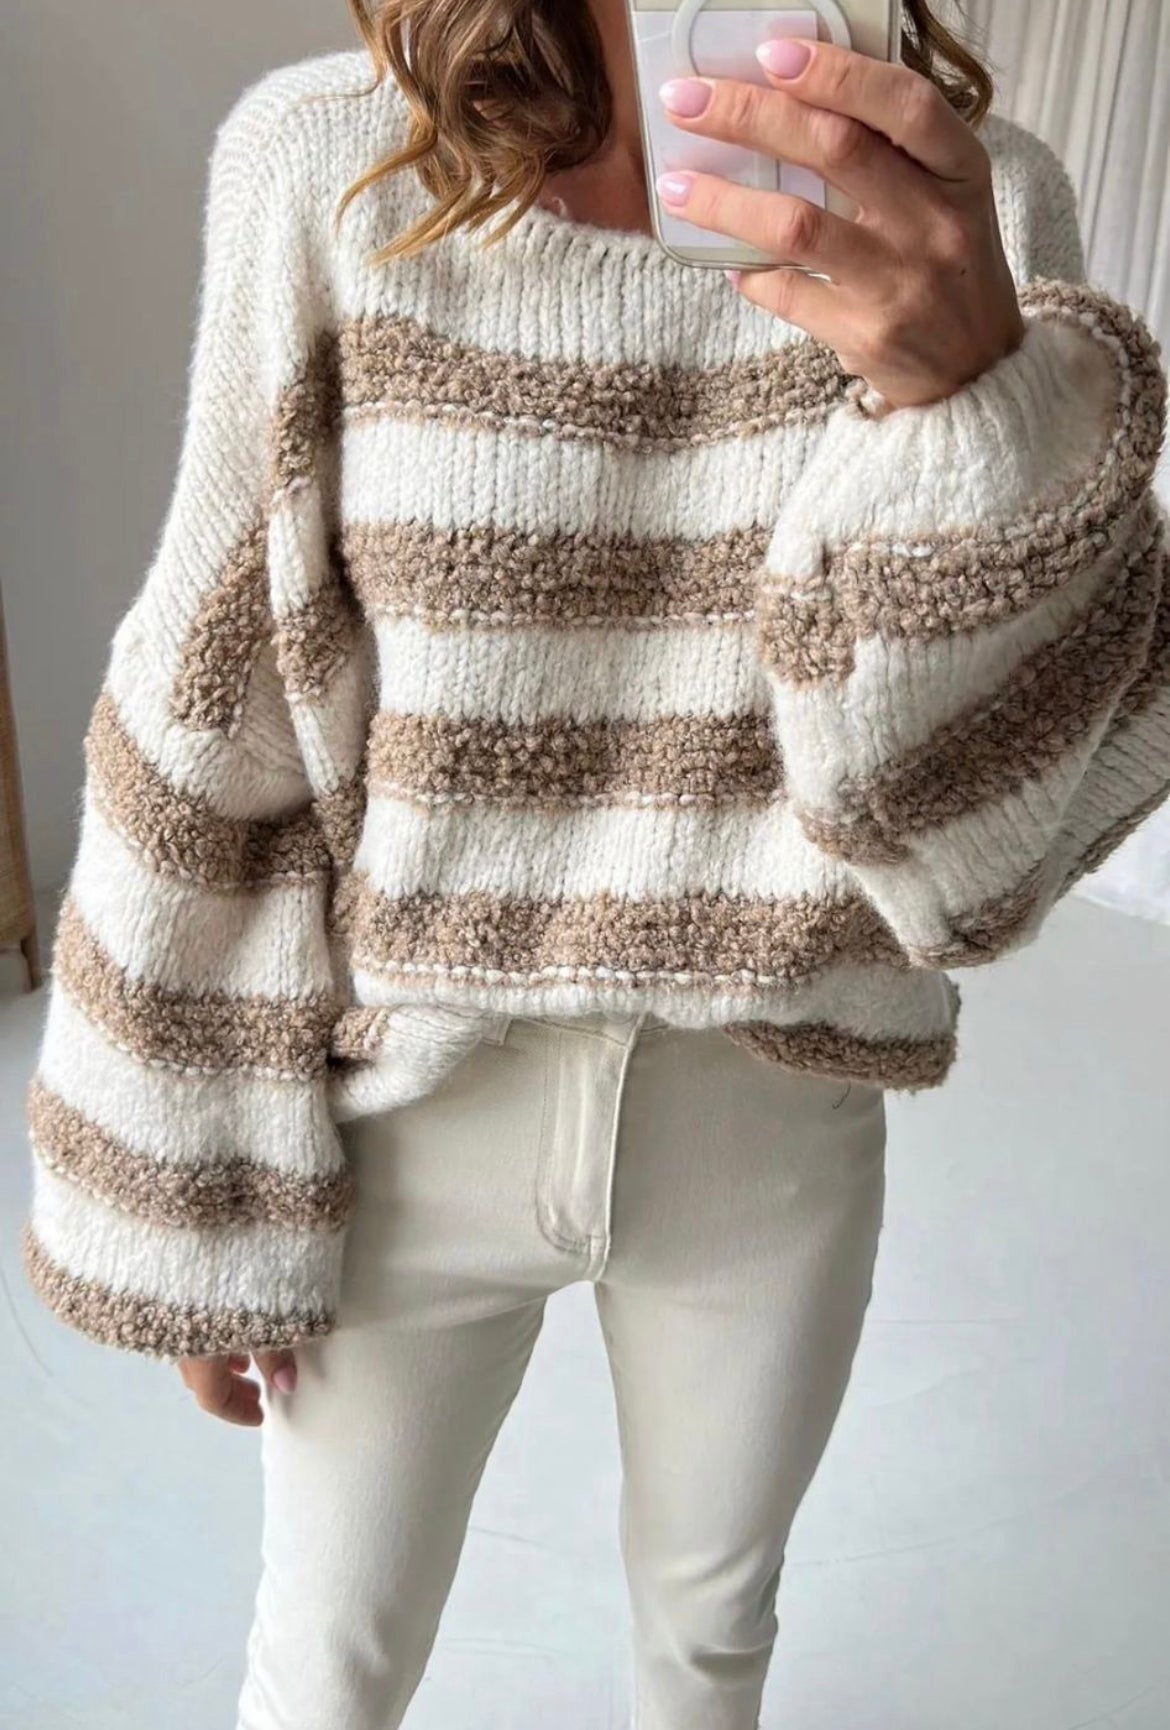 Striped knit